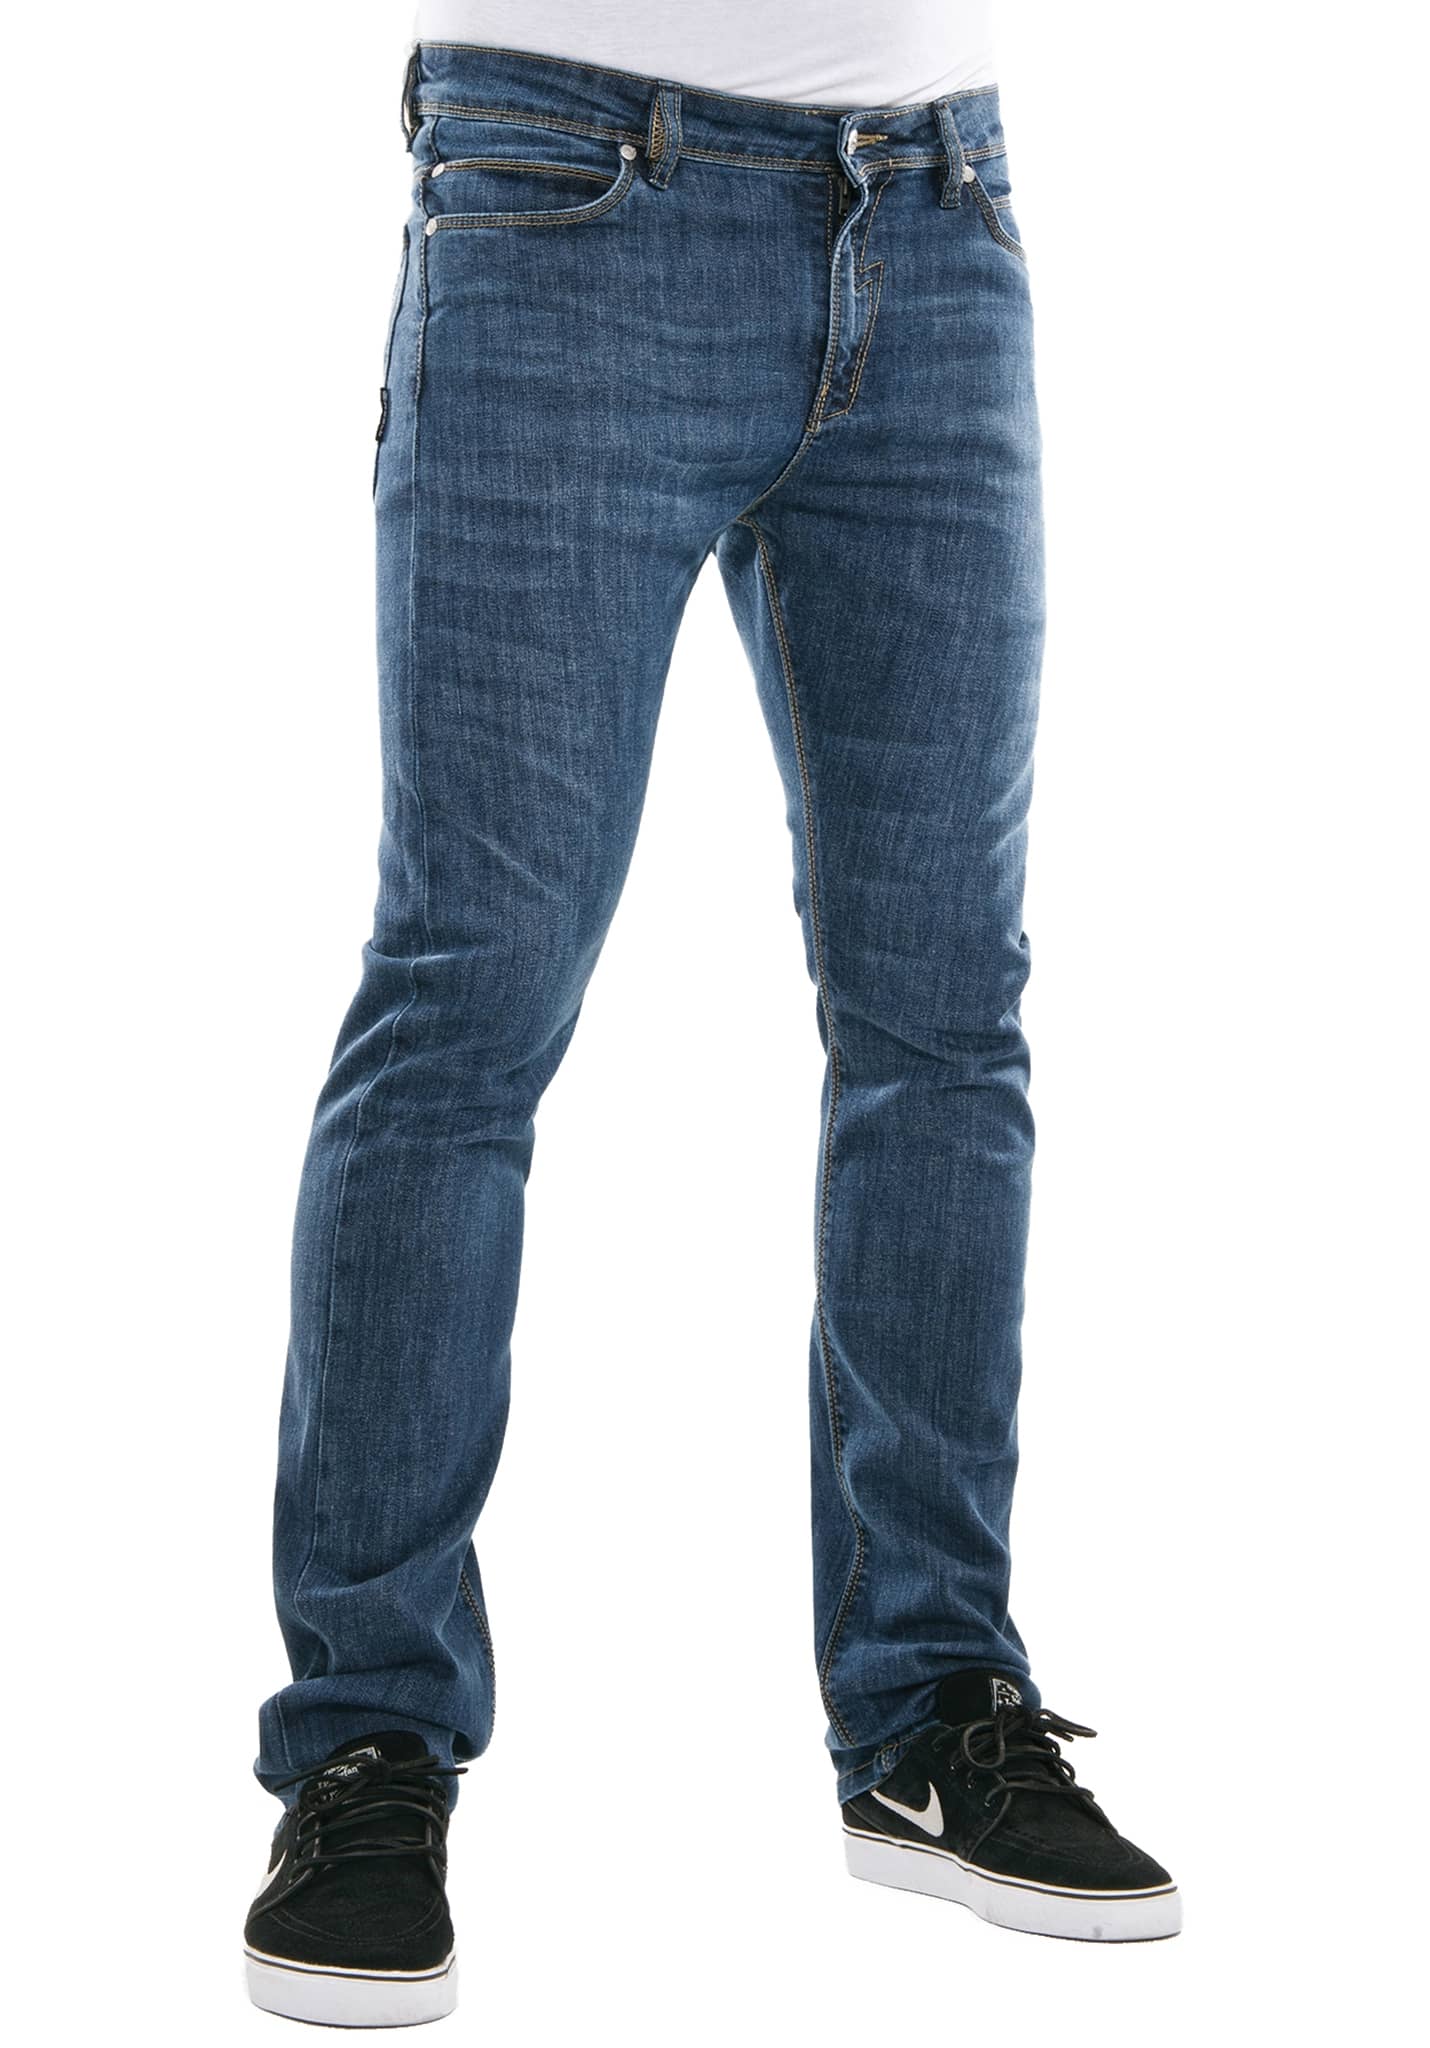 Reell Skin Jeans jeans 26/30